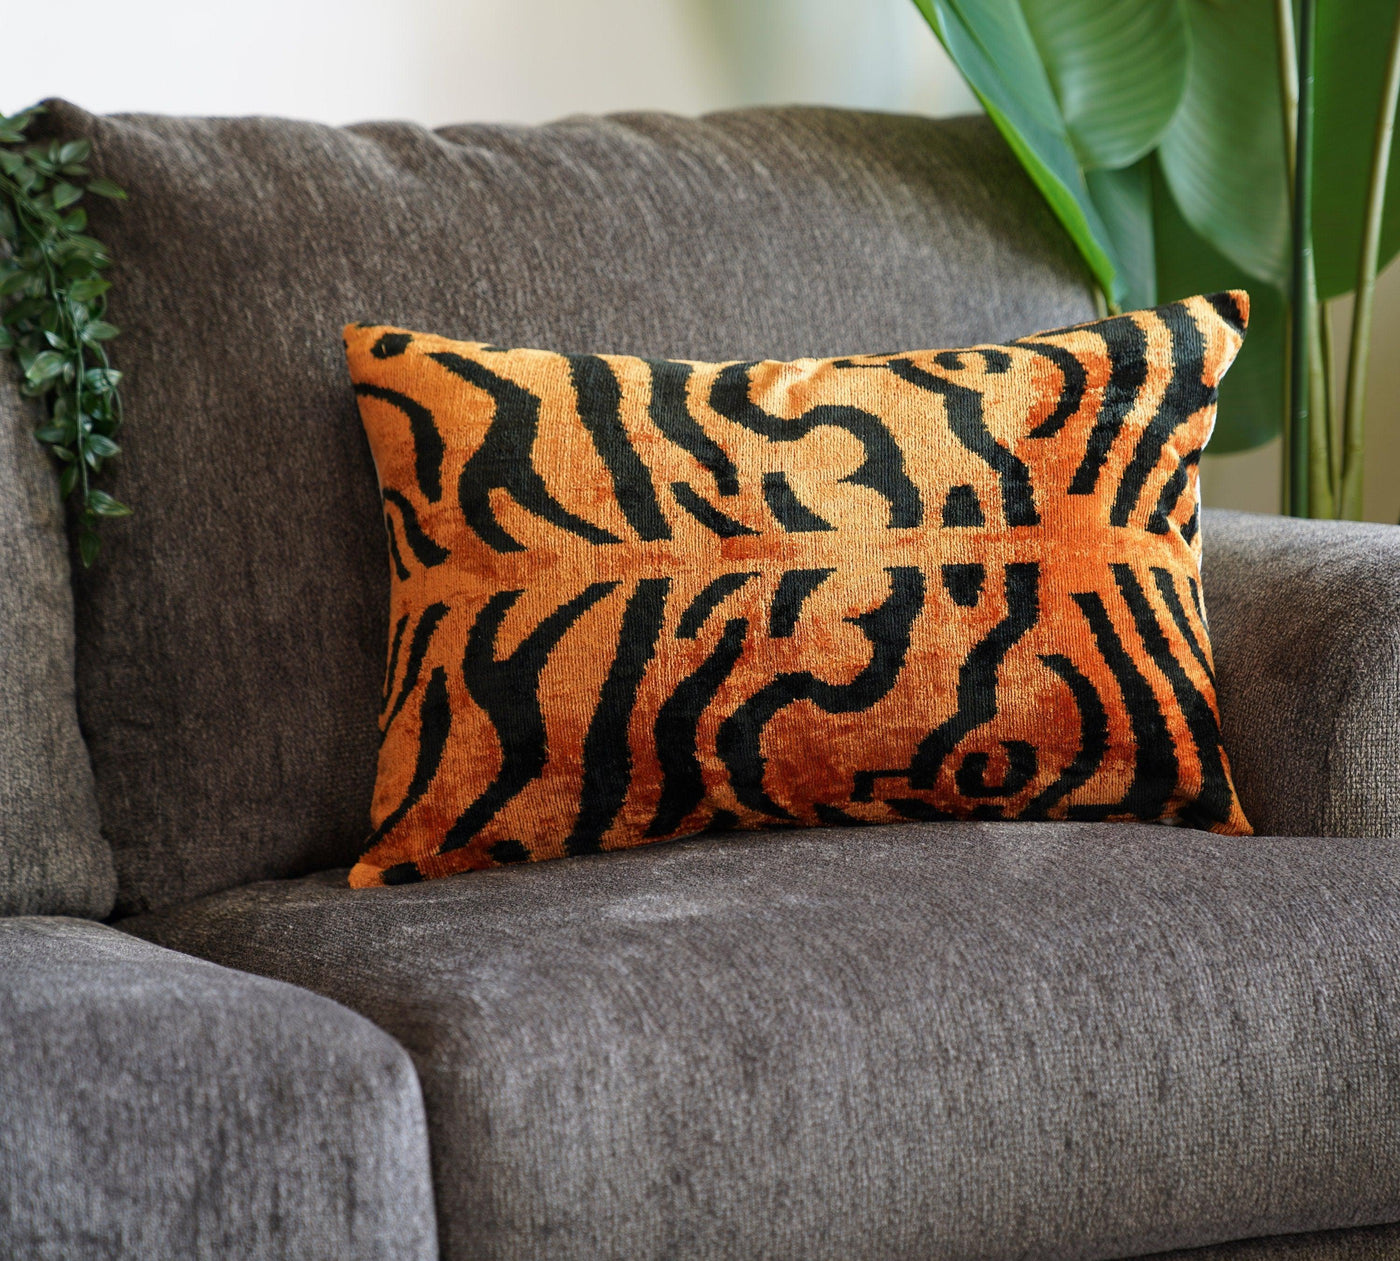 Canvello Tiger Print Burnt Orange Throw Pillow | 16x24 | 16x16 |Set of 2|